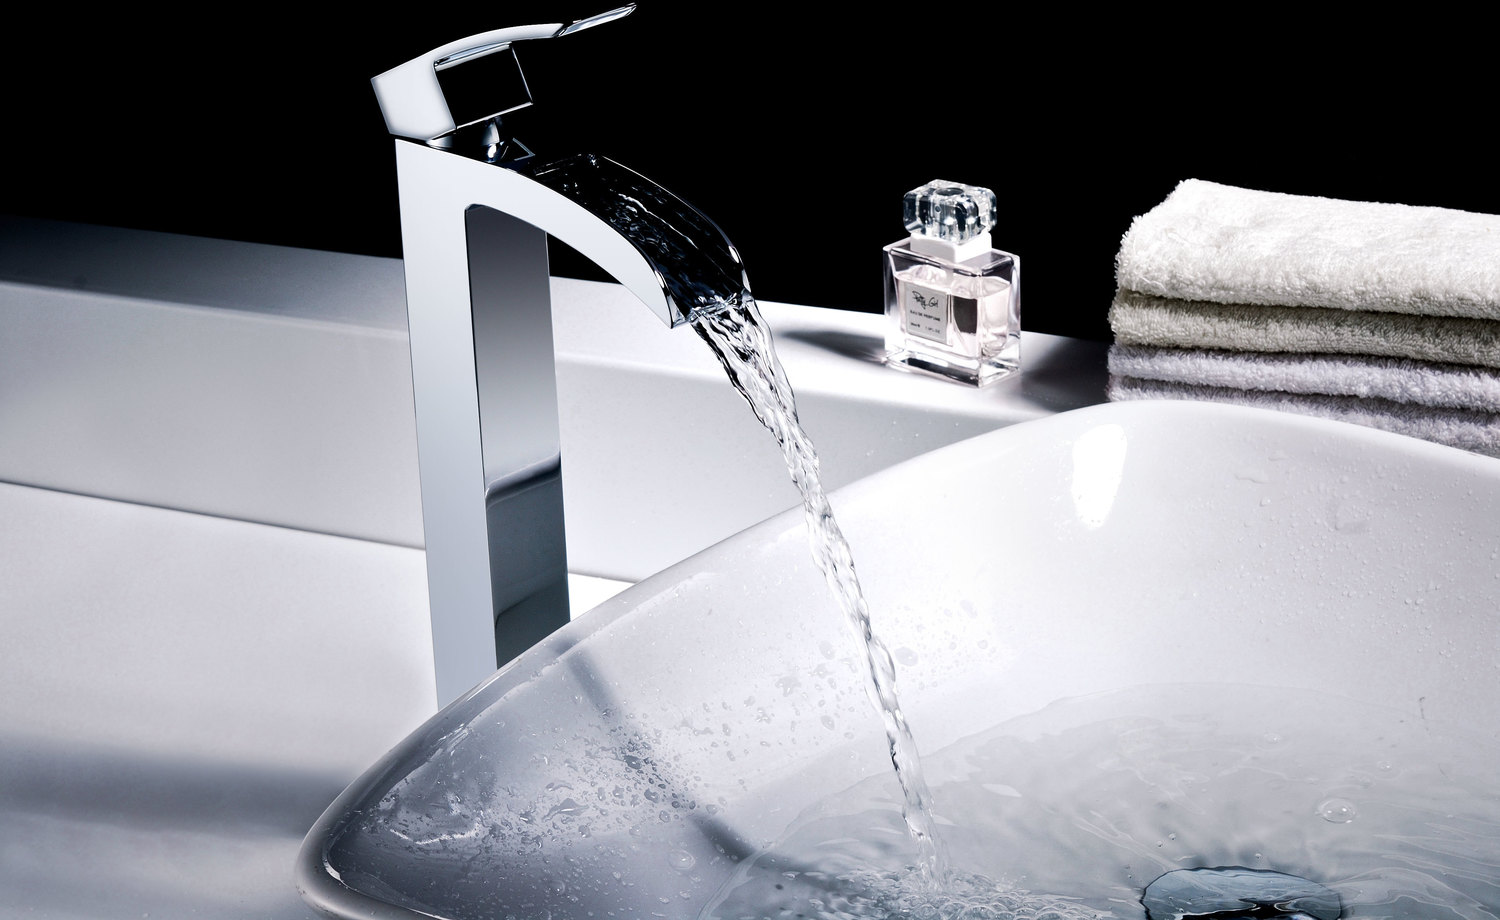 hole faucet Anzzi BATHROOM - Faucets - Bathroom Sink Faucets - Single Hole Chrome